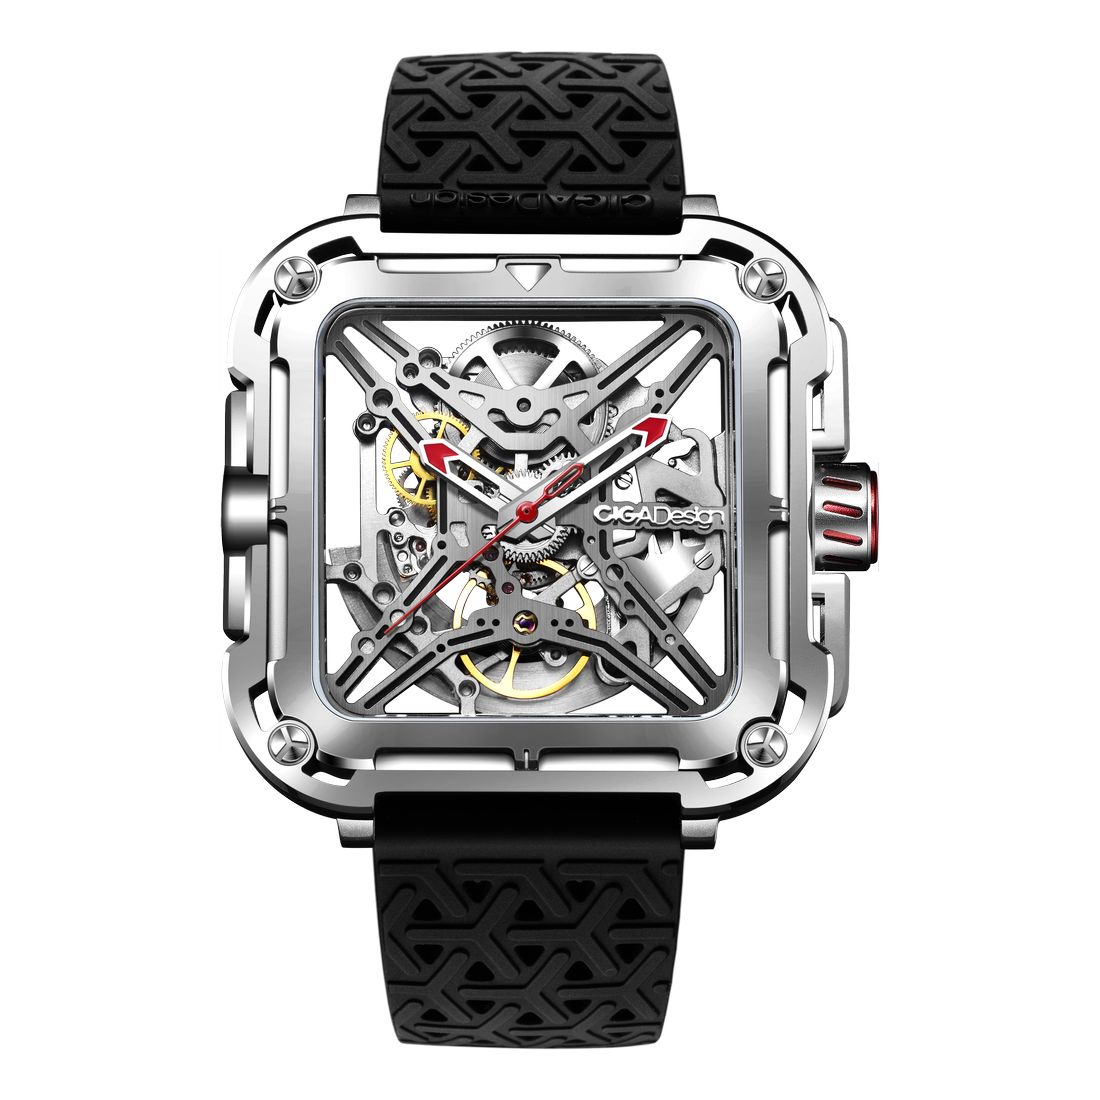 Ciga Design X Series Great Ape Stainless Steel Hollow Design Wrist Watch - Silver